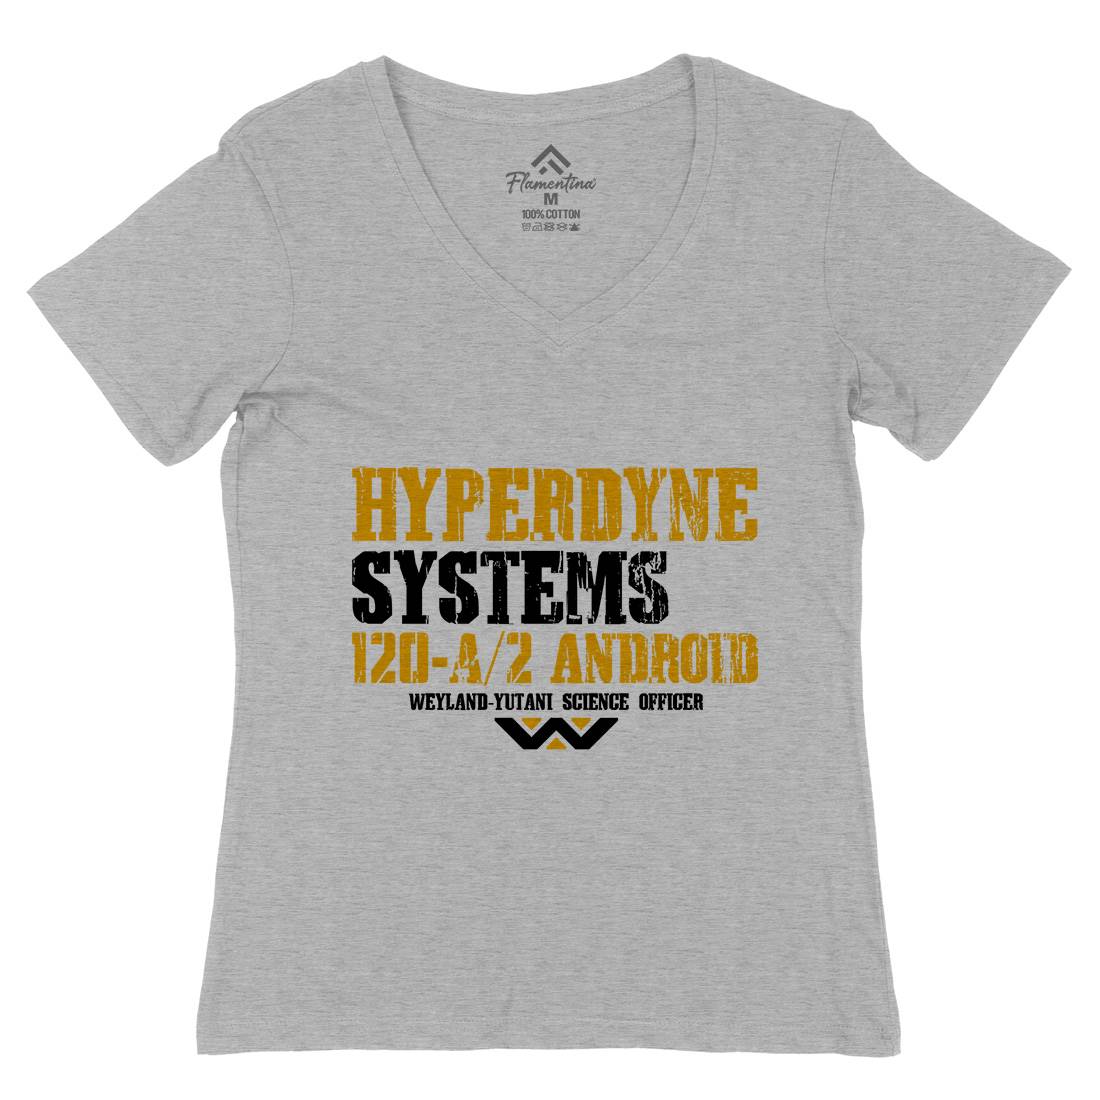 Hyperdyne Systems Womens Organic V-Neck T-Shirt Space D404